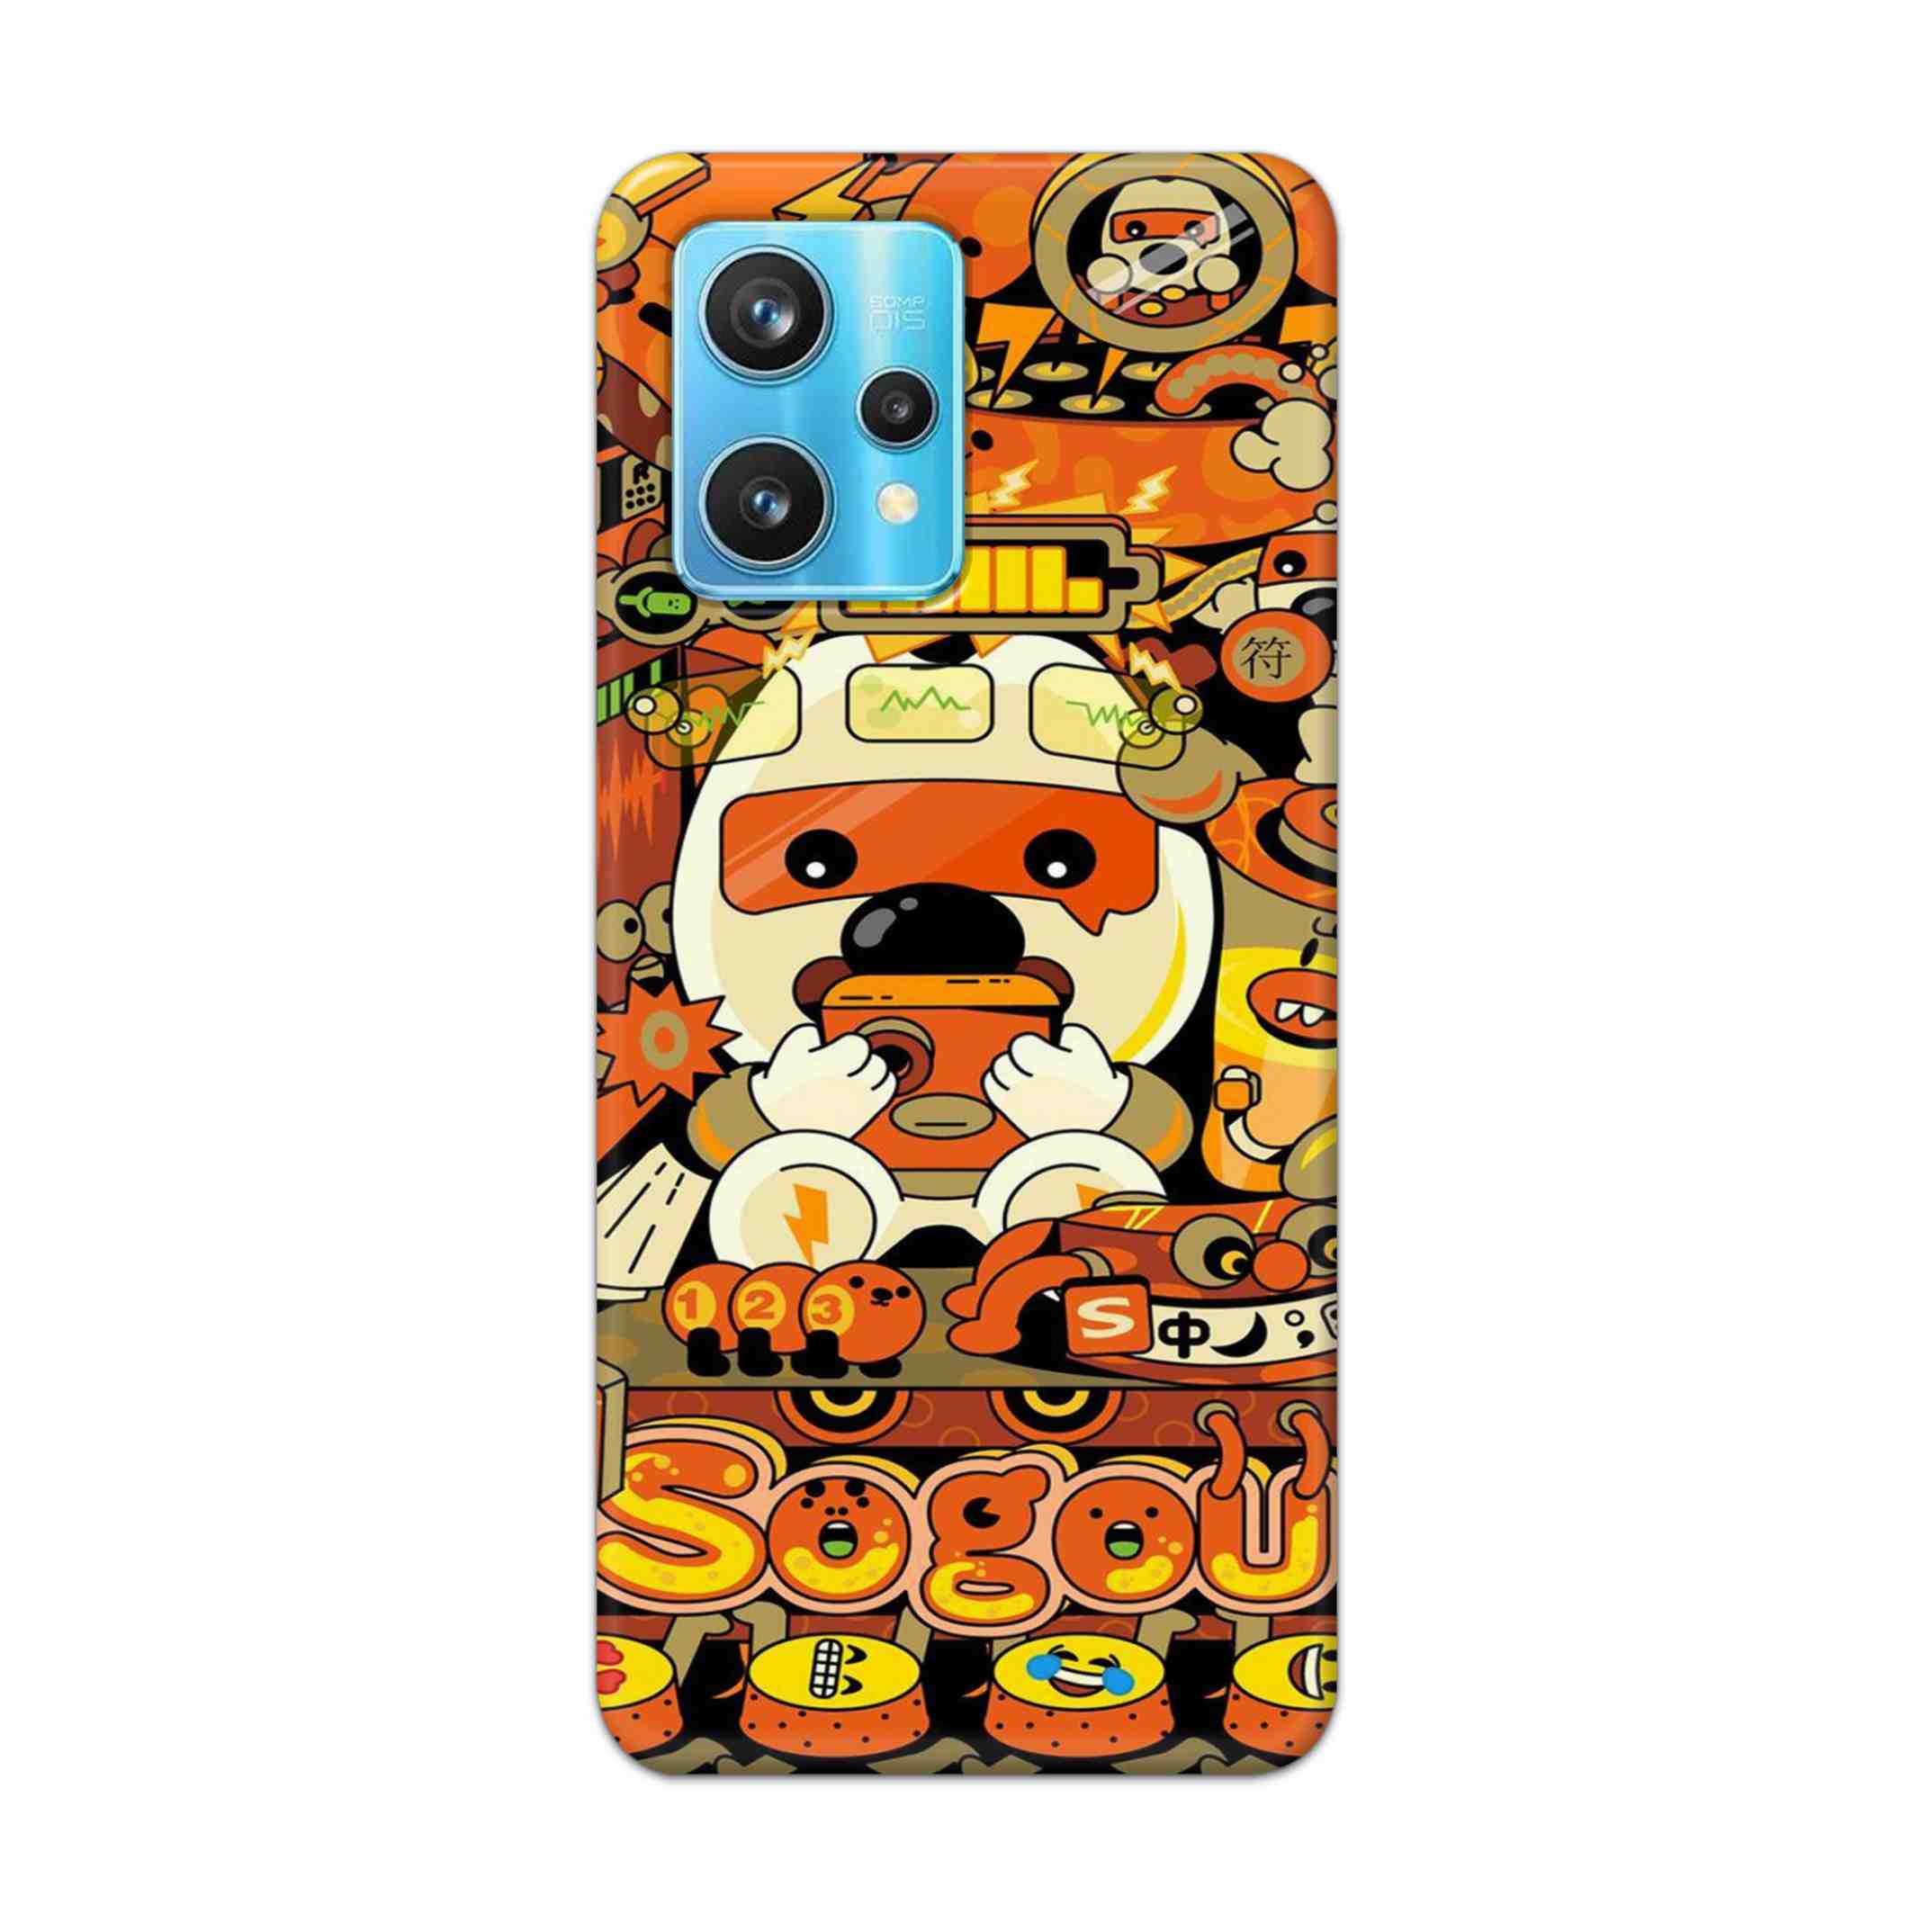 Buy Sogou Hard Back Mobile Phone Case Cover For Realme 9 Pro Plus Online